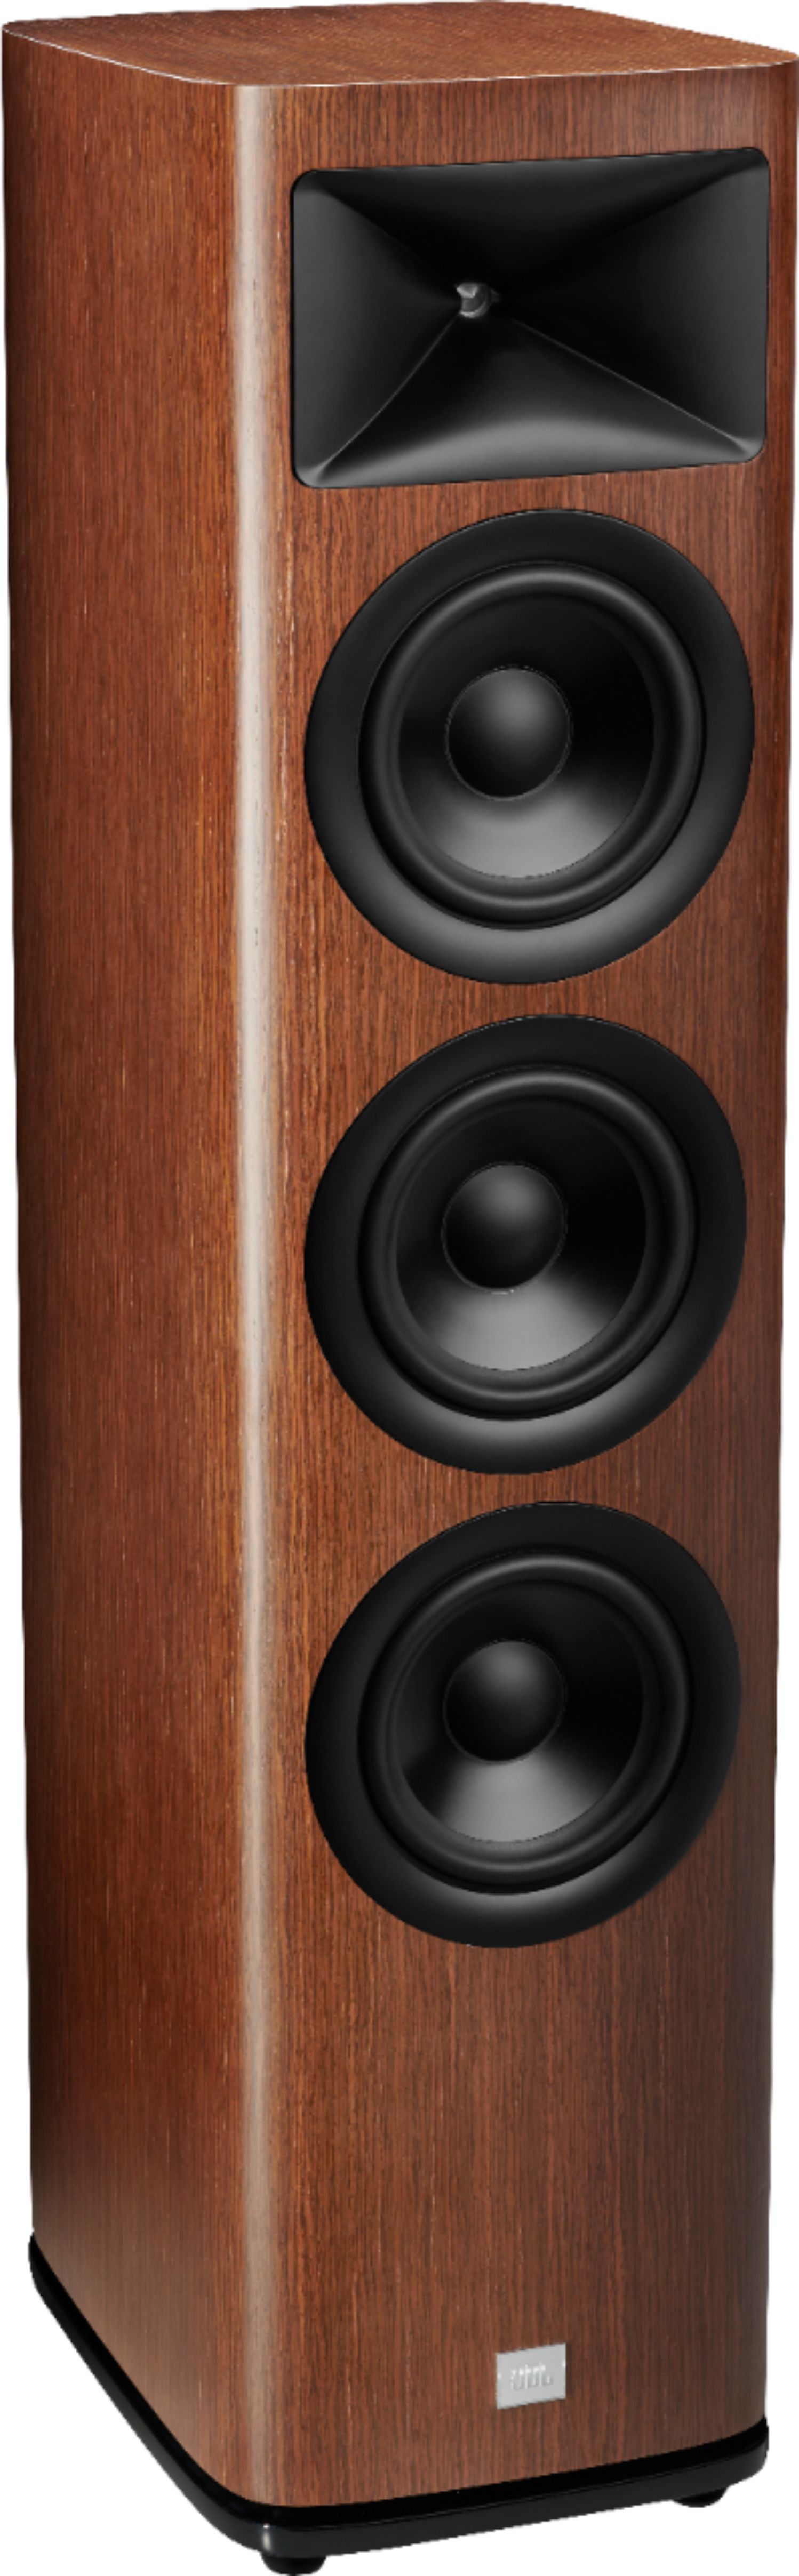 Left View: JBL - HDI3600 Triple 6.5-inch 2-1/2 way Floorstanding Loudspeaker with 1" compression tweeter - Walnut Wood Finish